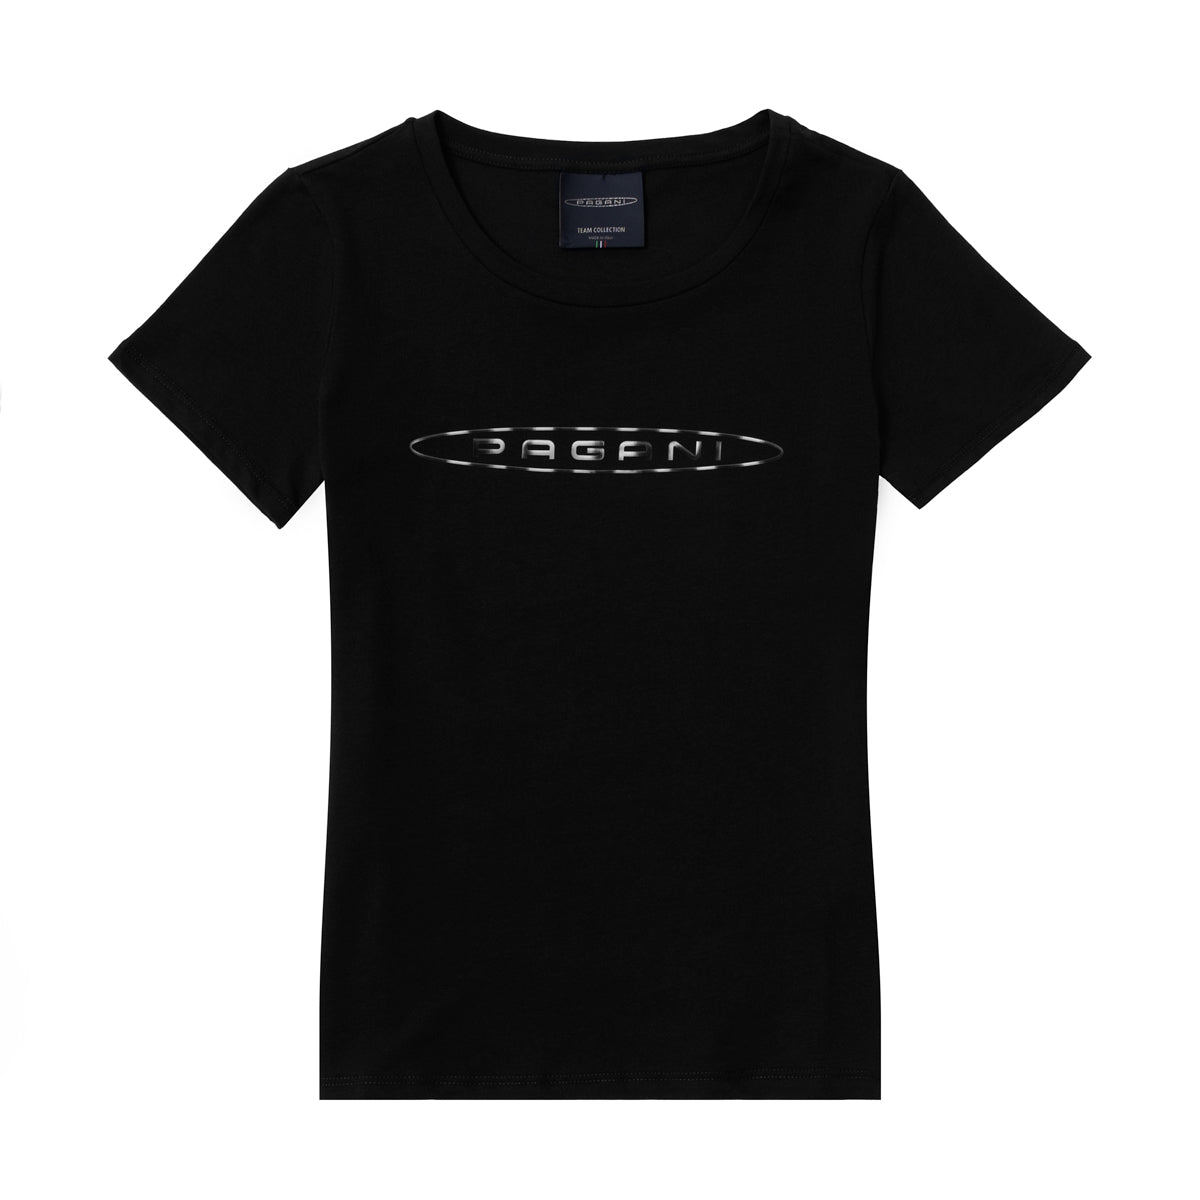 Camiseta básica para mujer negra | Team Collection